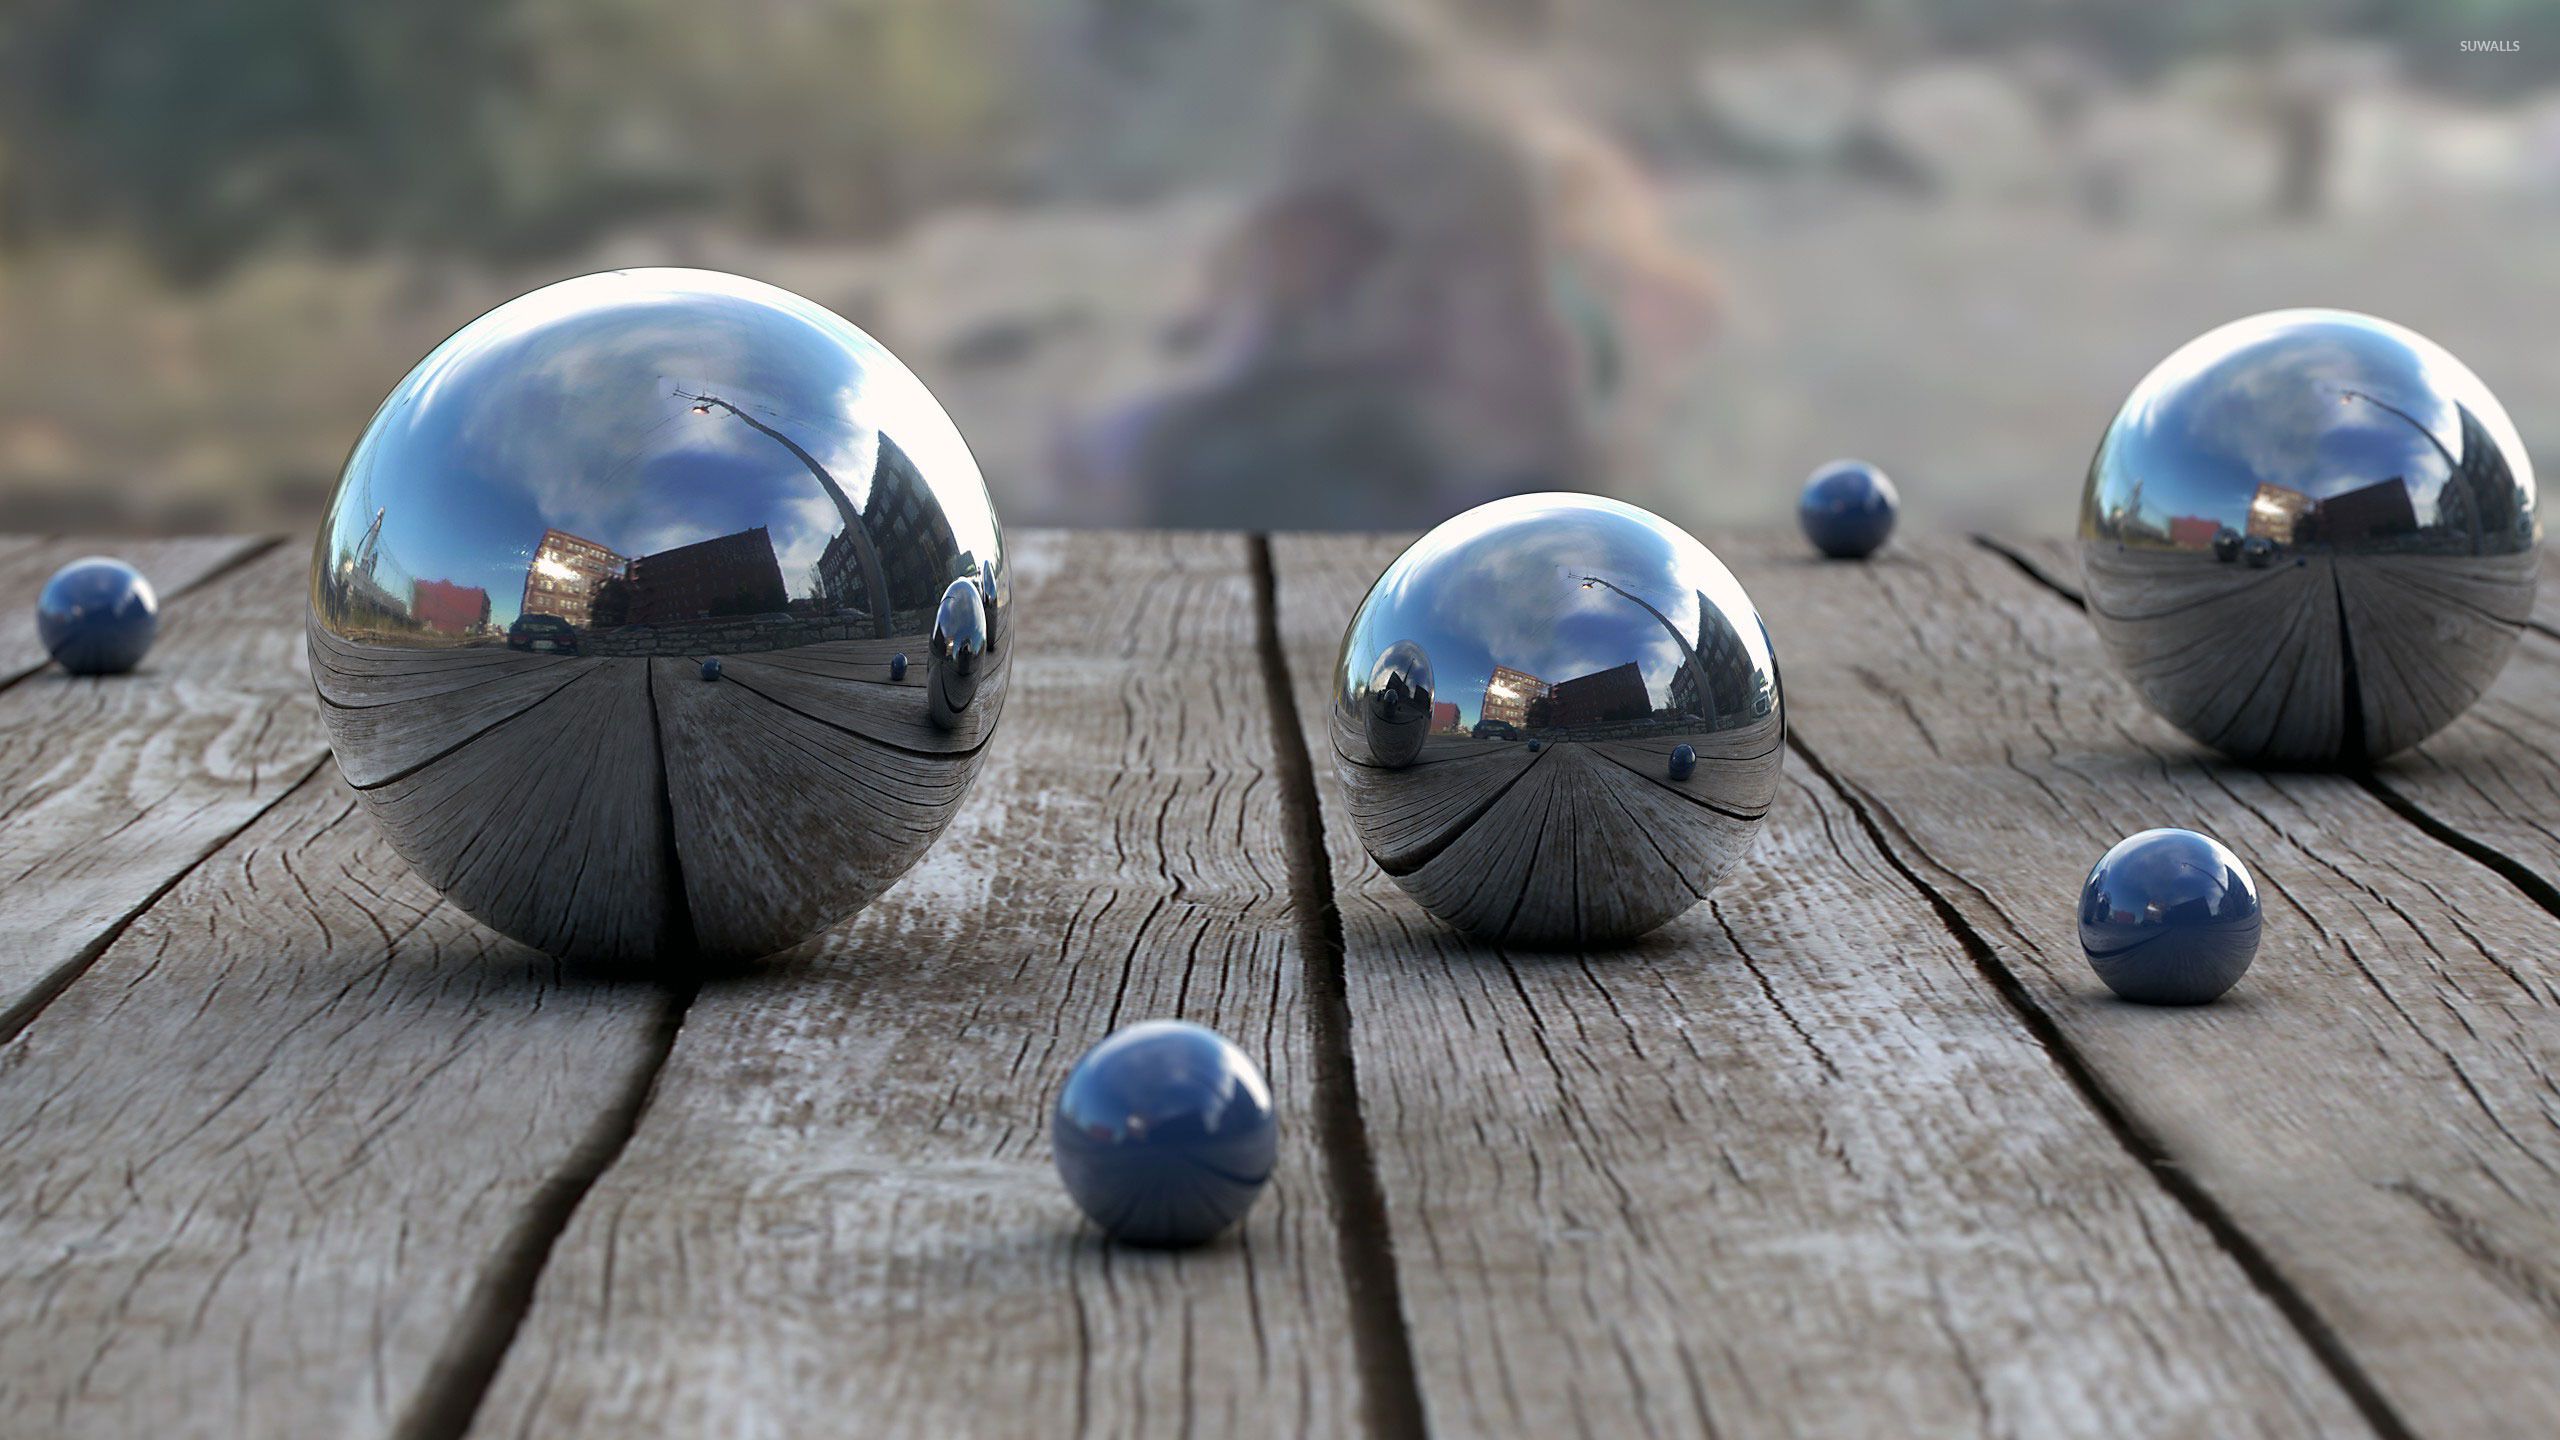 Metallic spheres reflecting the city wallpaper